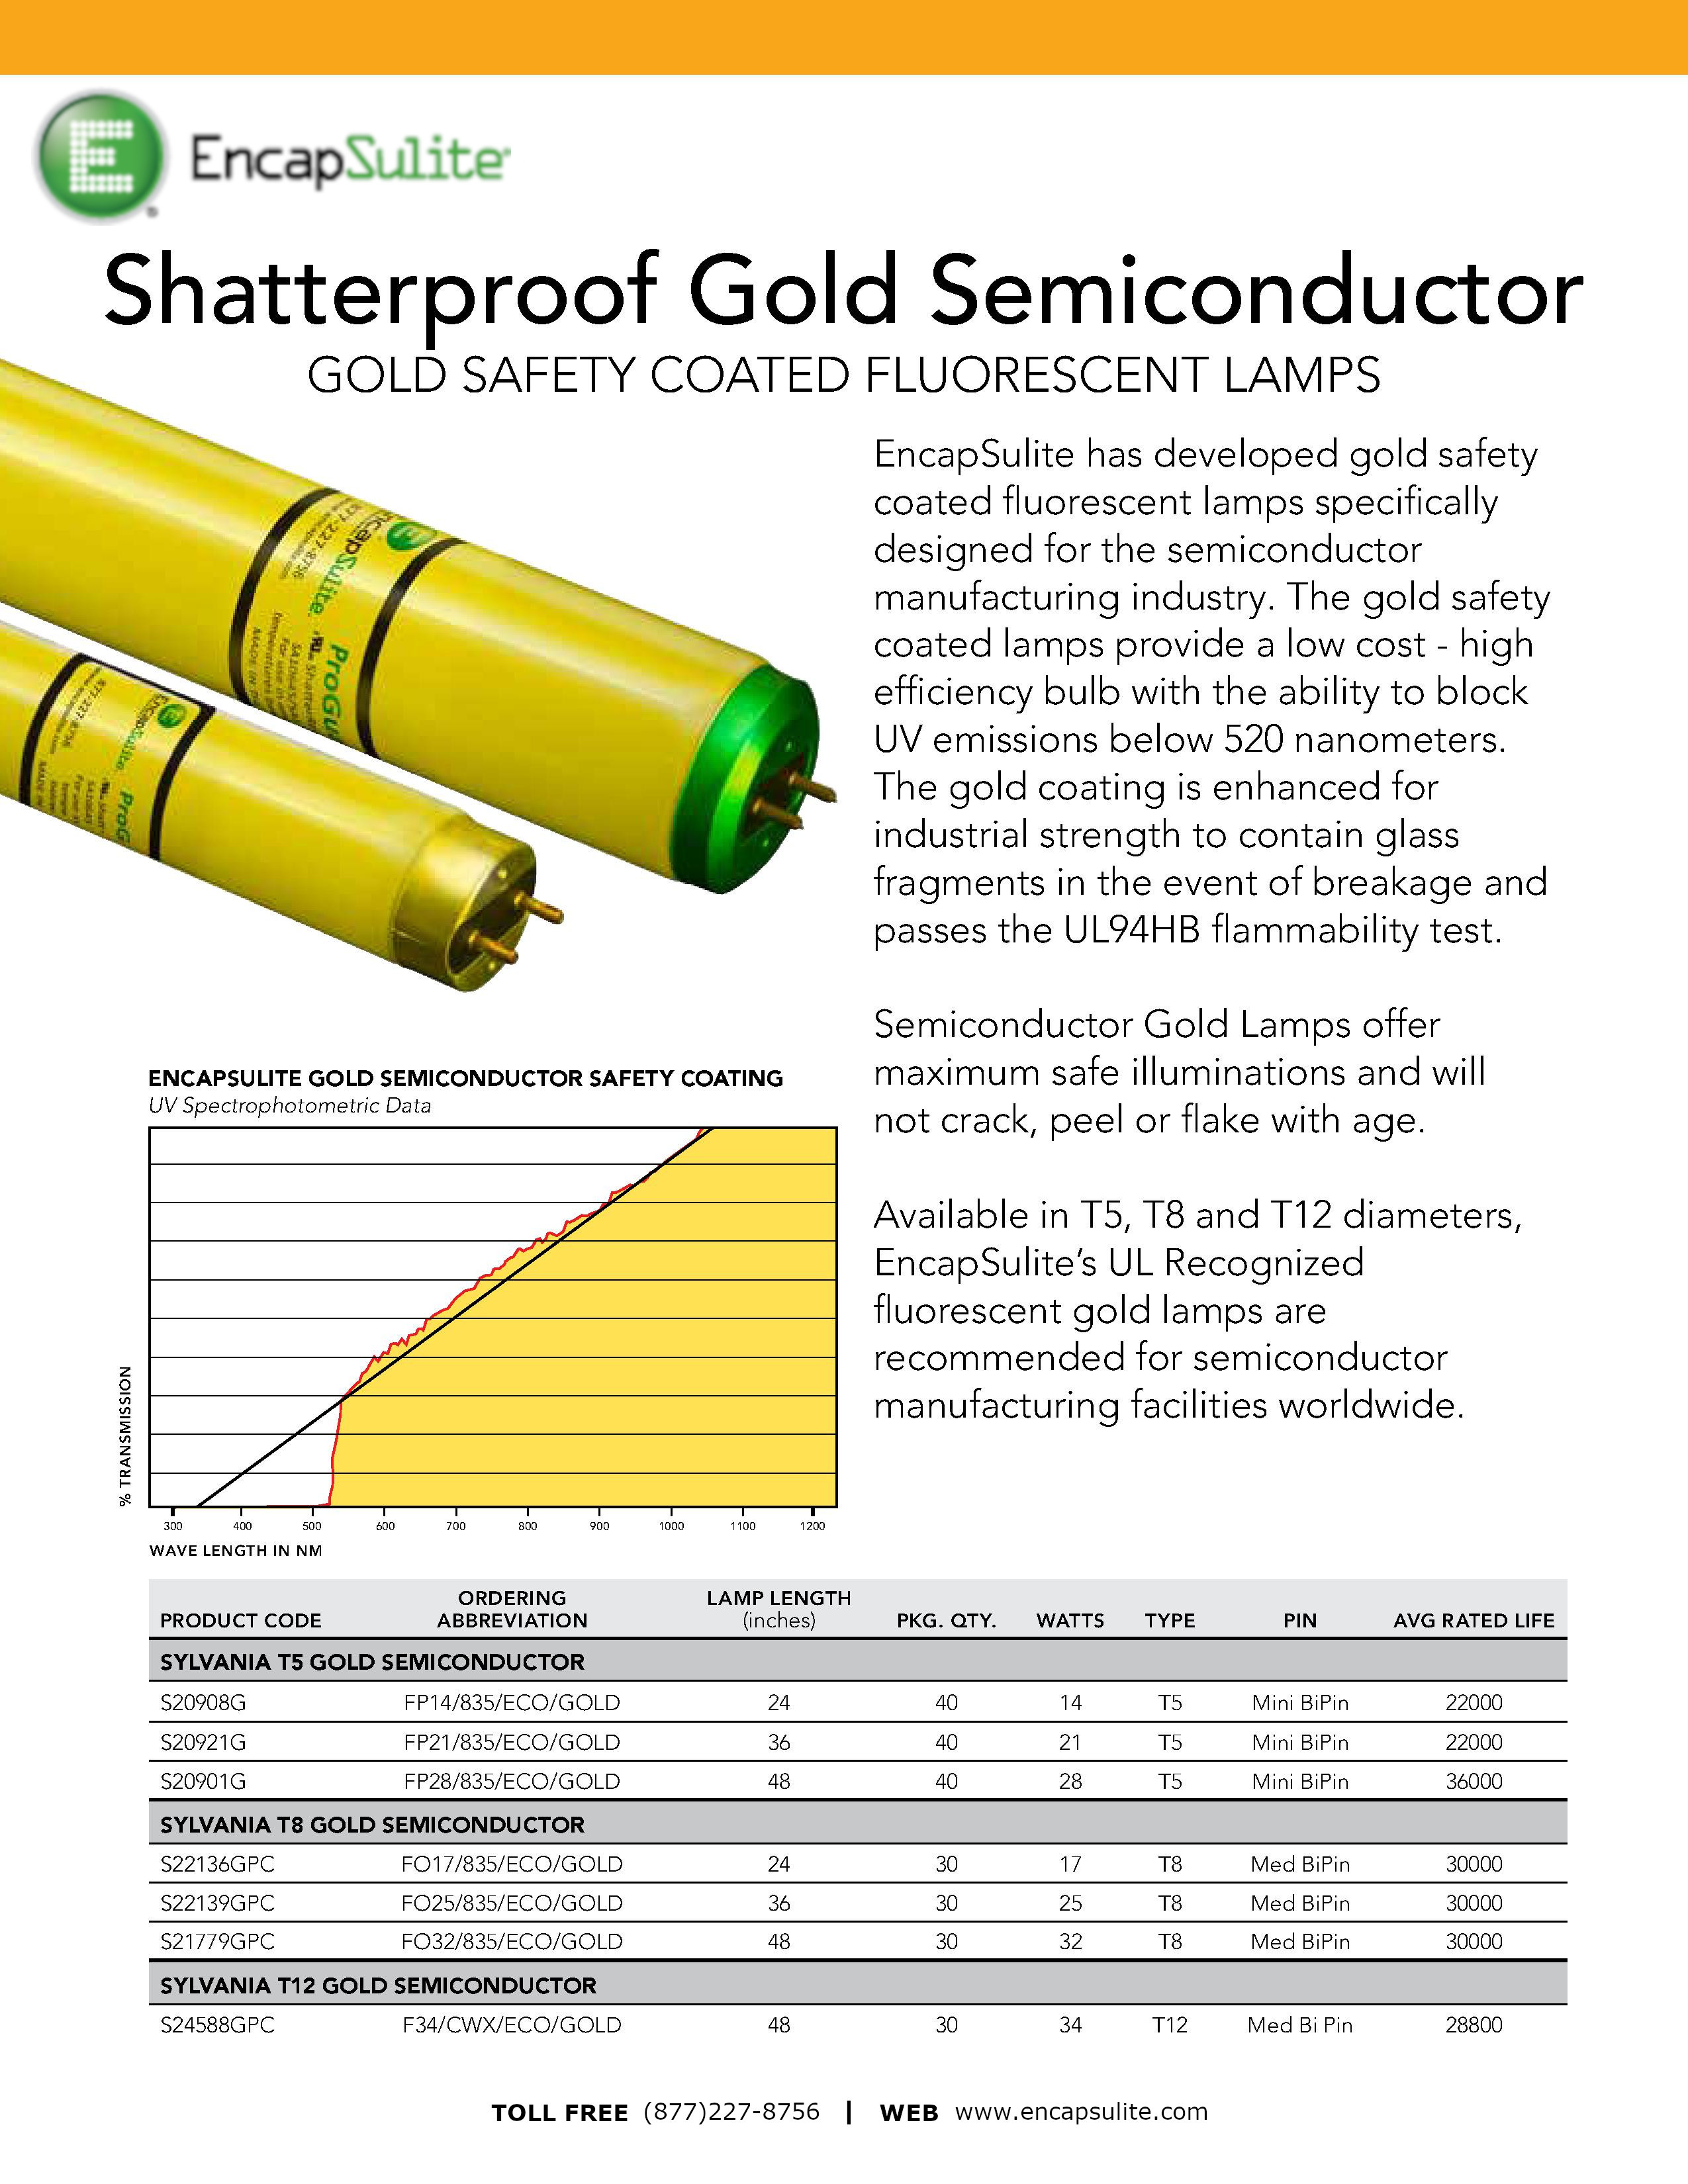 Shatterproof Gold Semiconductor Lighting